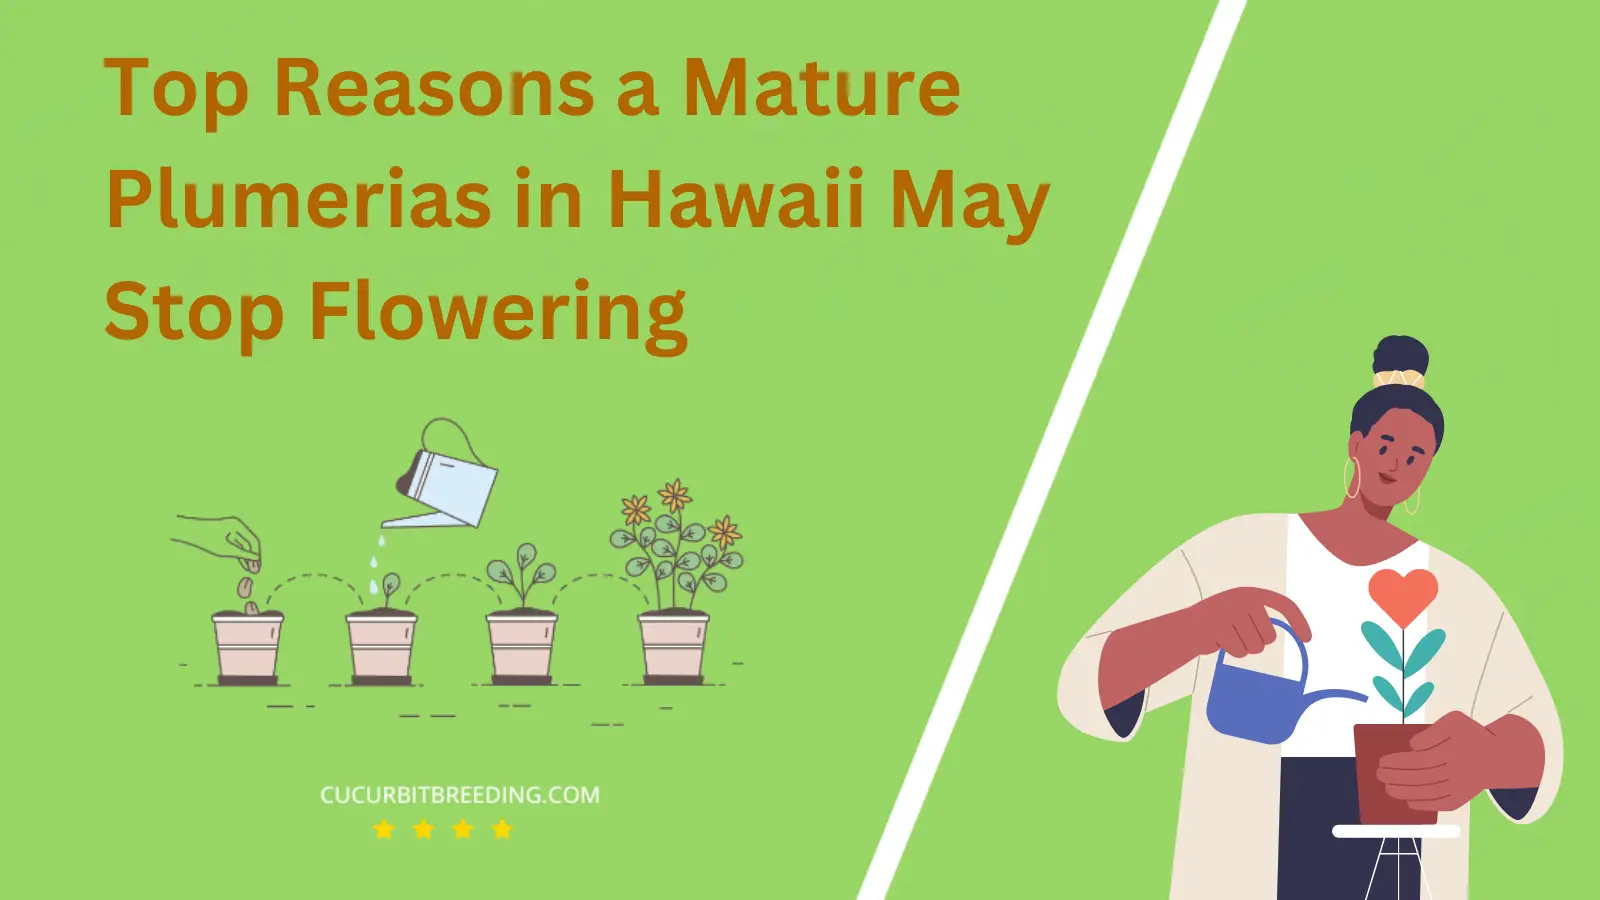 Top Reasons a Mature Plumerias in Hawaii May Stop Flowering